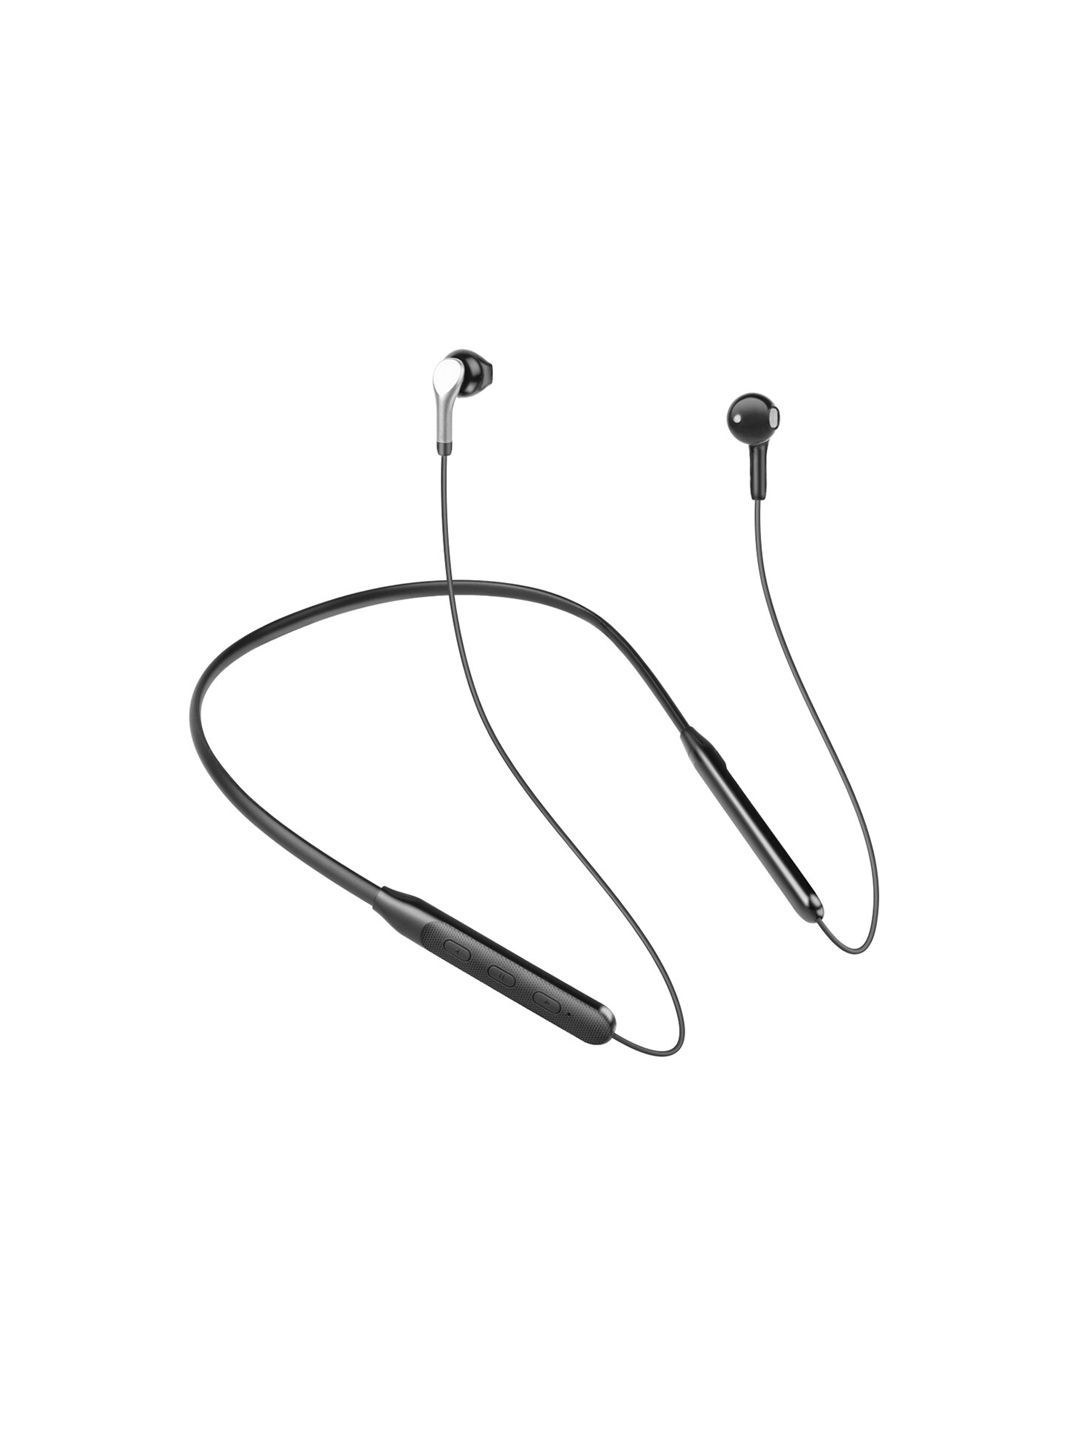 GIZMORE Grey Giz MN220 Bluetooth 5.0 in-Ear Wireless Neckband Earphone Price in India